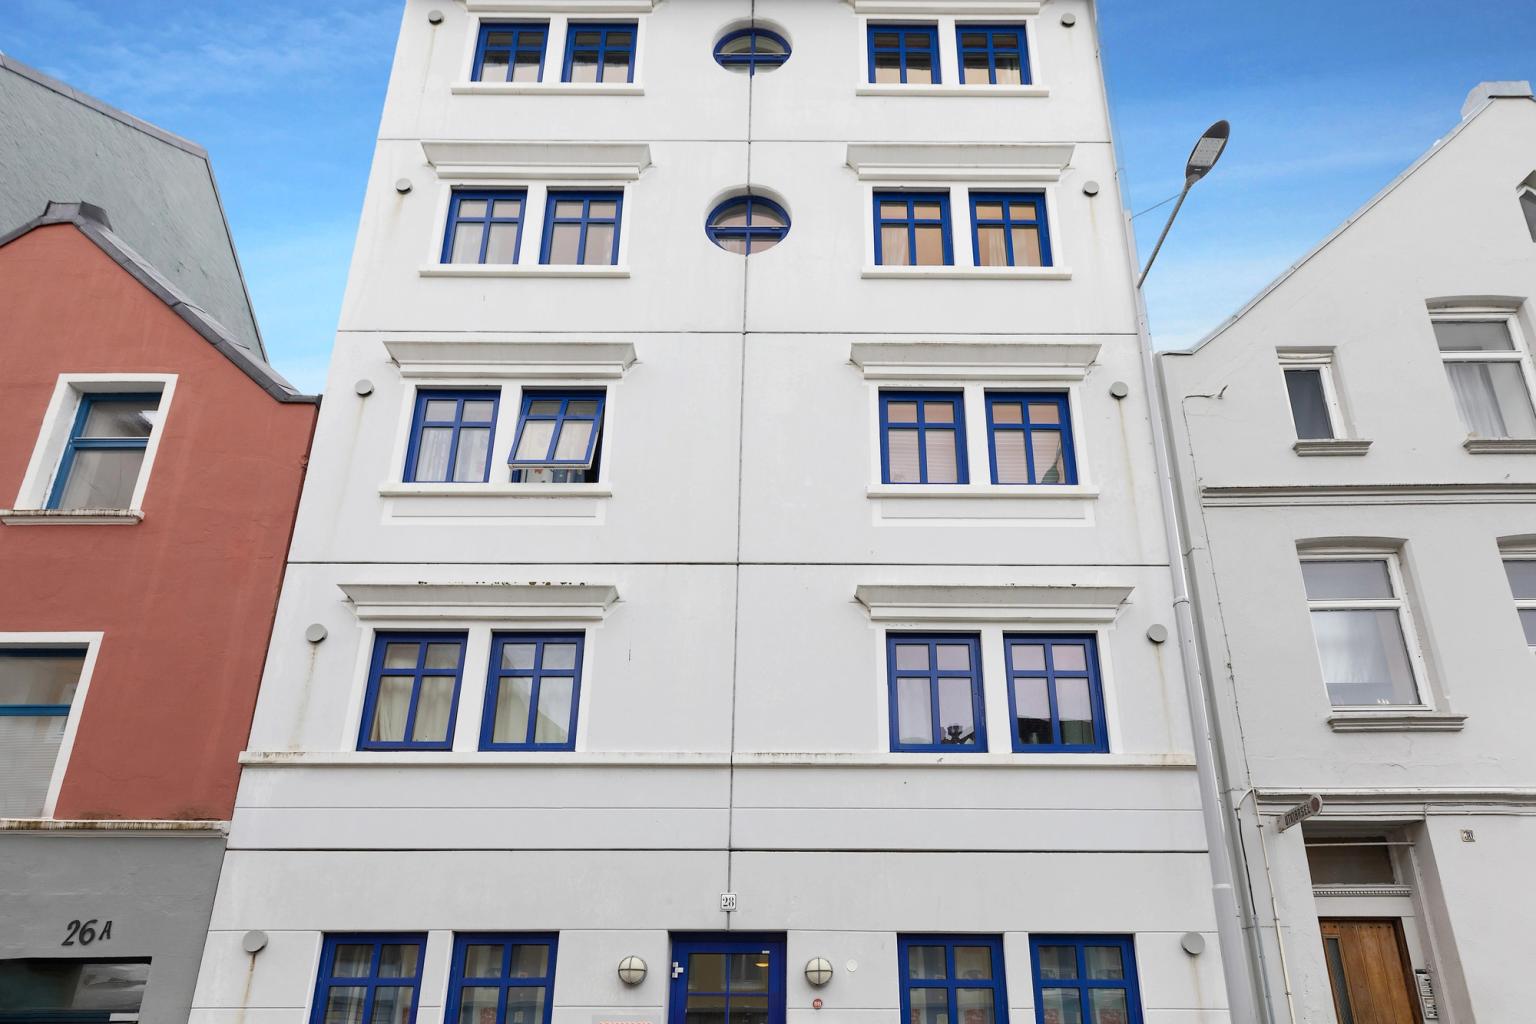 Facade of Sverres gate Student Housing.